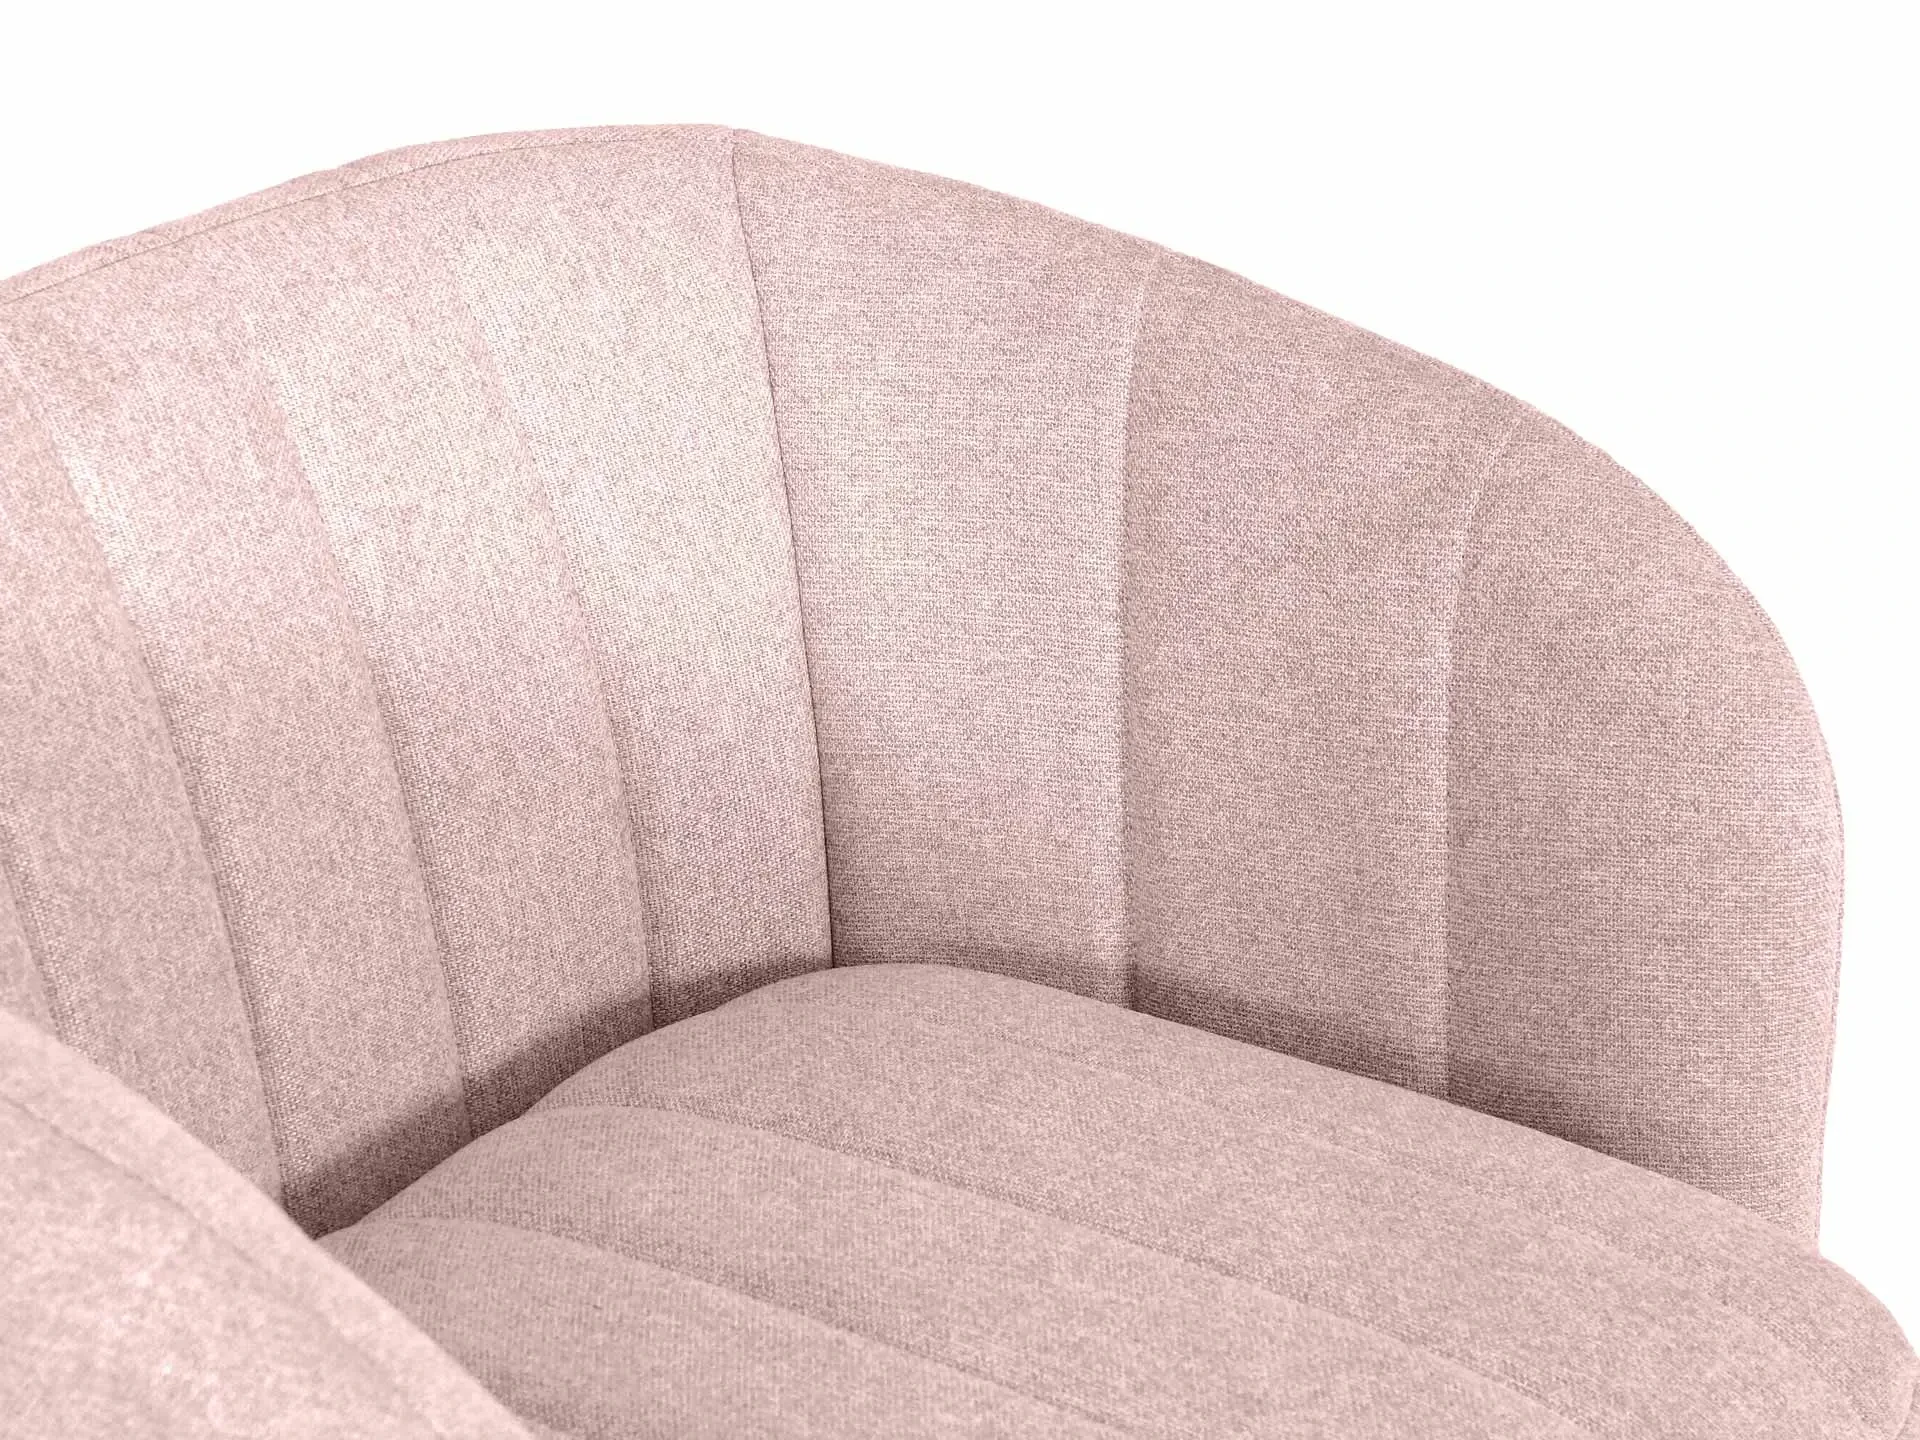 Кресло Lecco розовый 745074